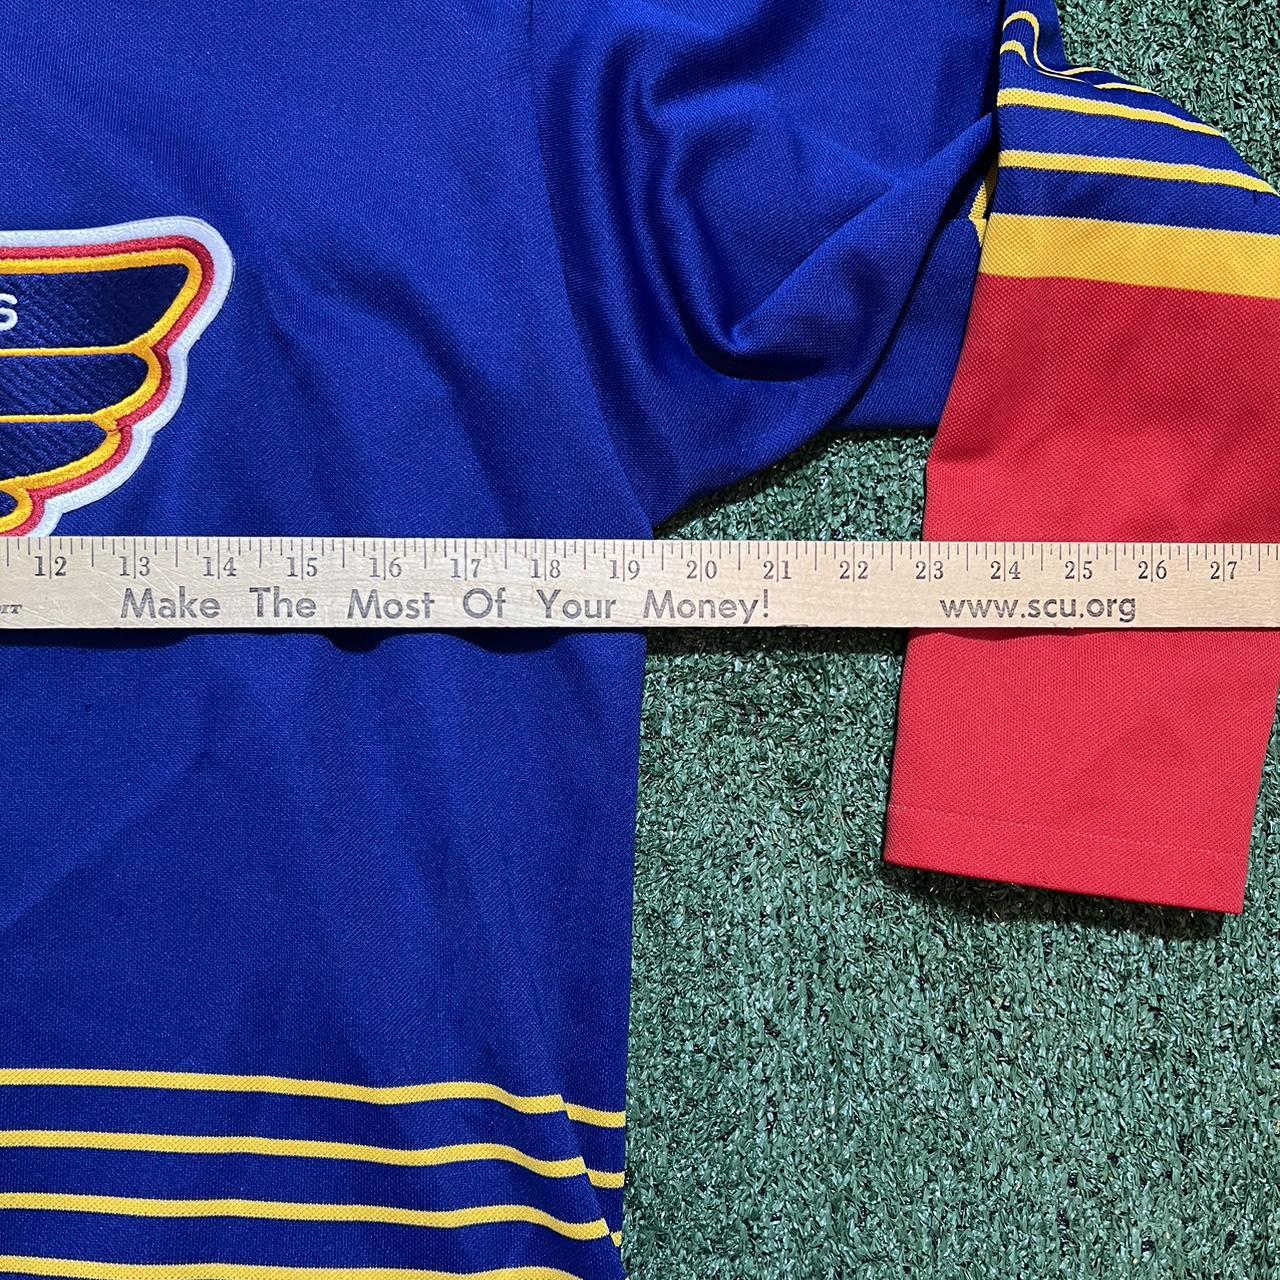 St Louis Blues NHL jersey Starter branded with - Depop